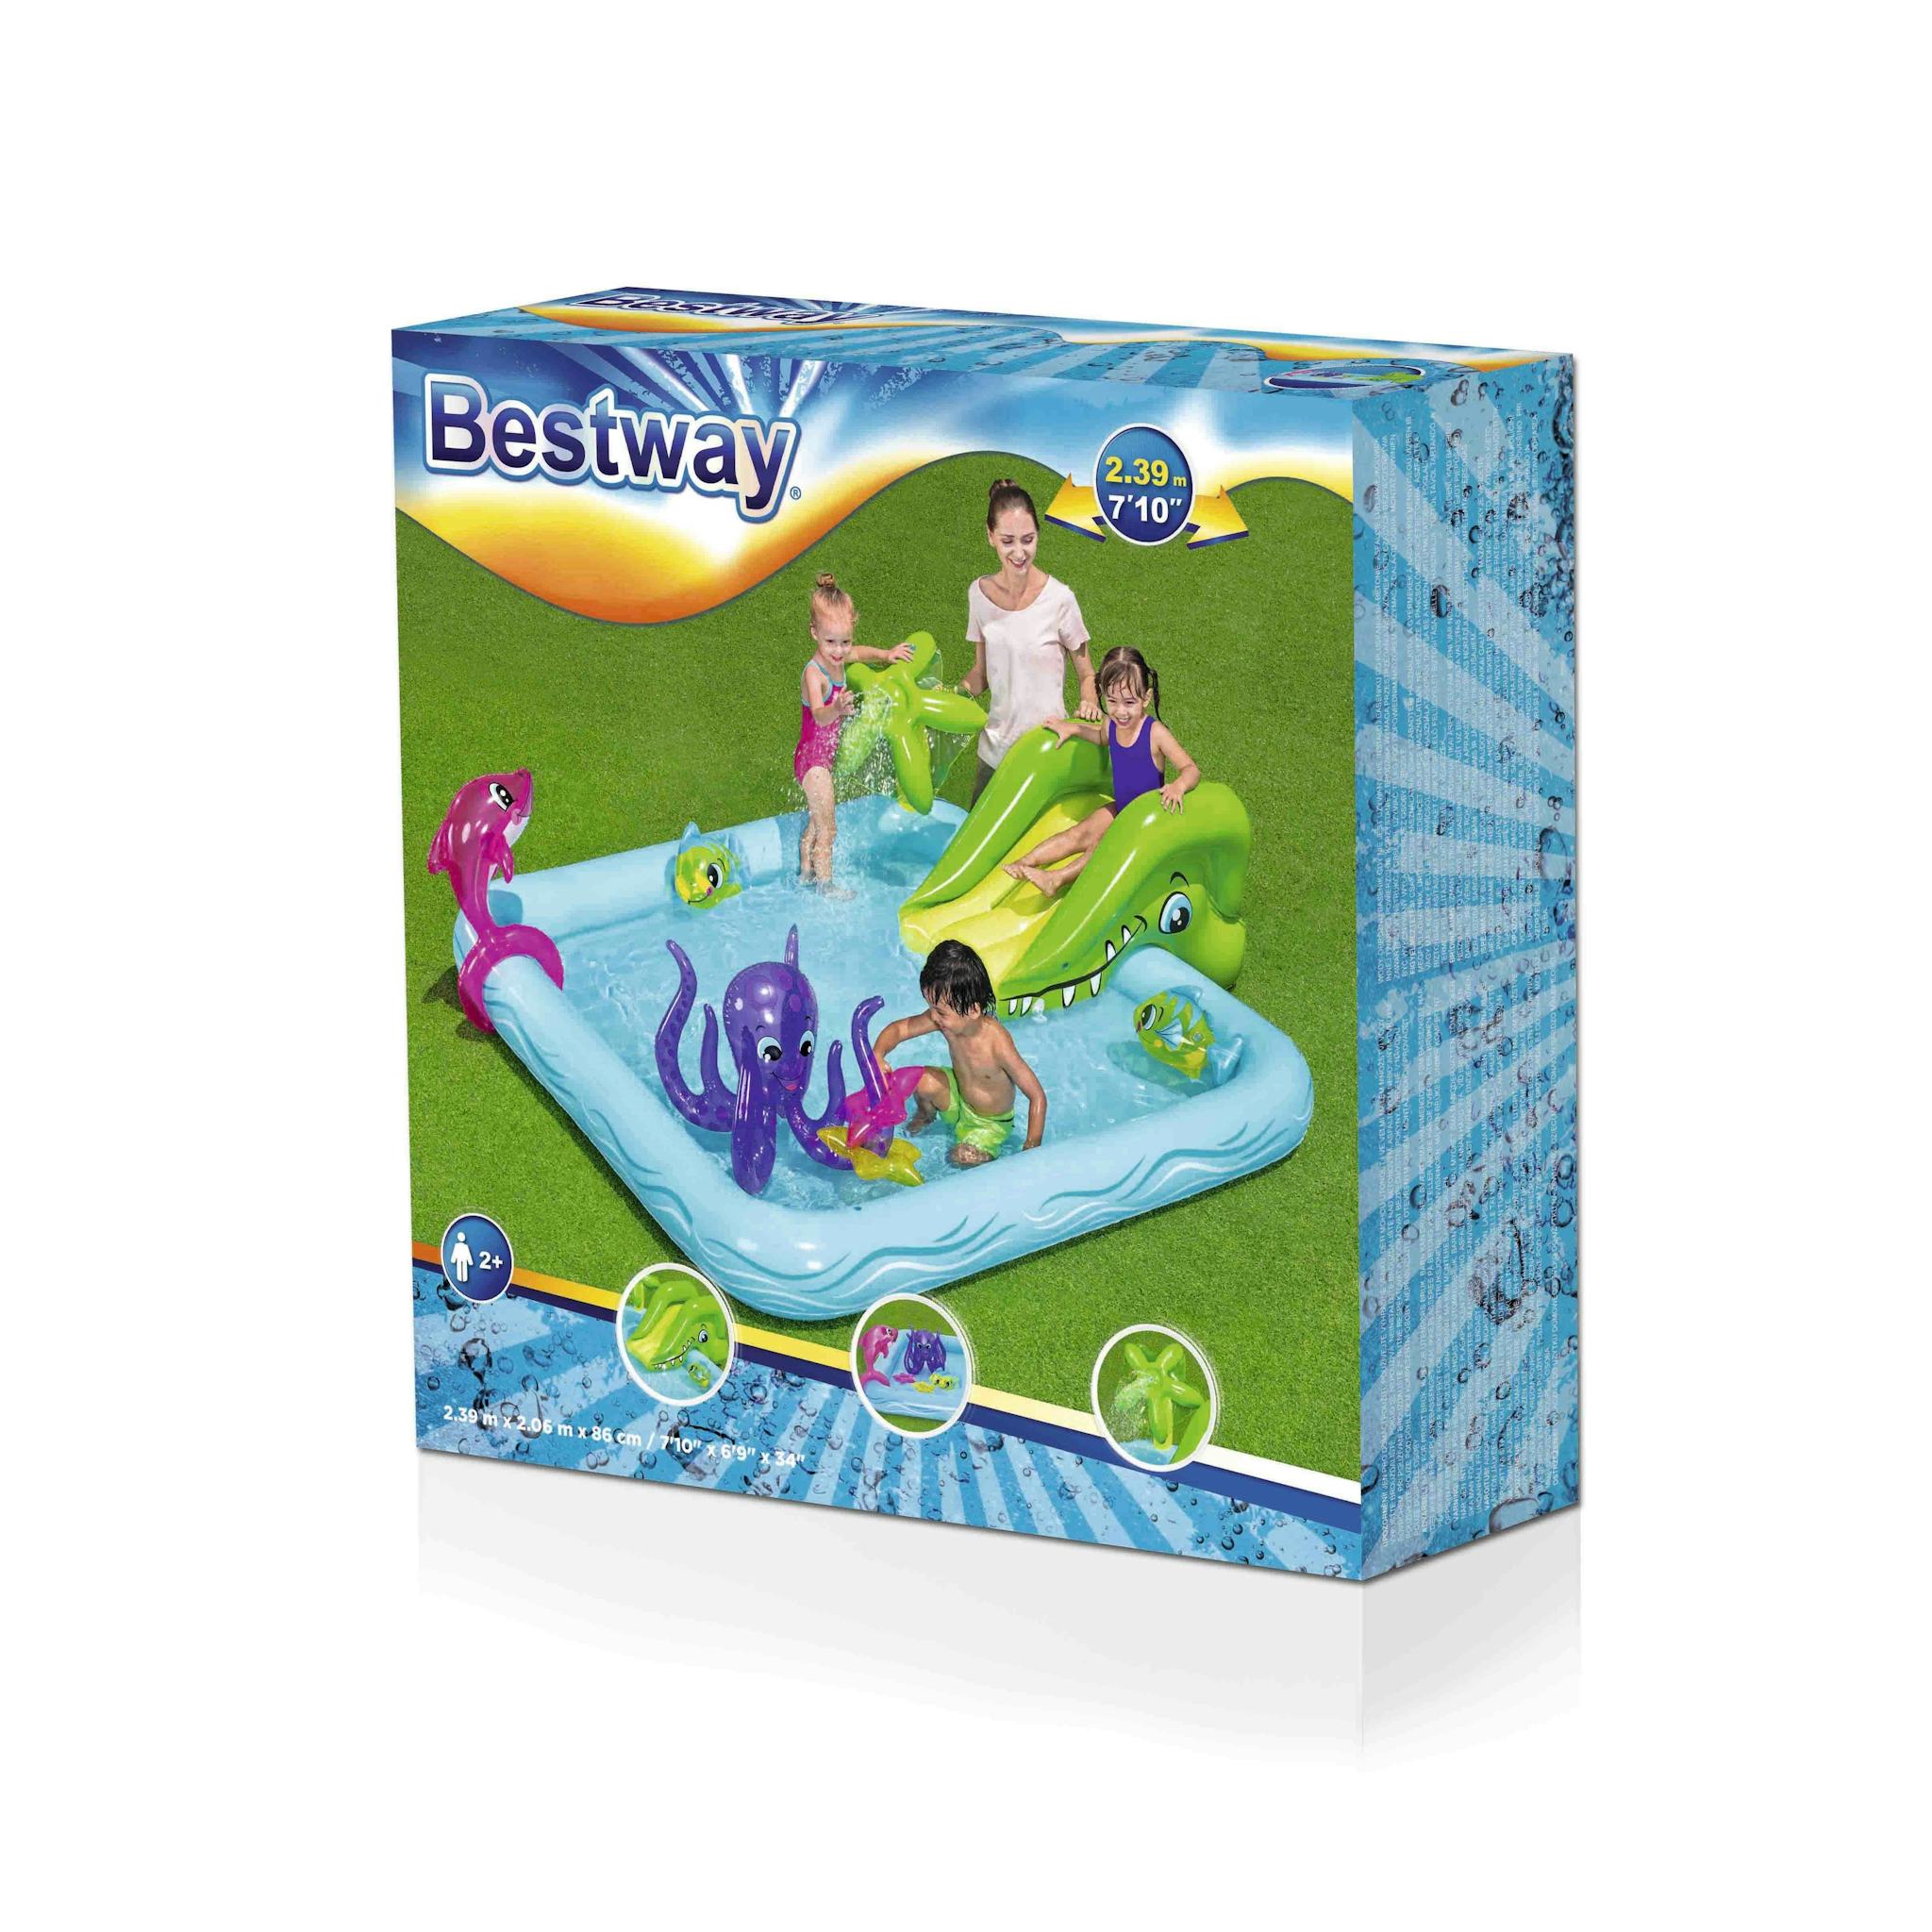 Giochi gonfiabili per bambini Playcenter gonfiabile Acquario Fantastico Bestway 7